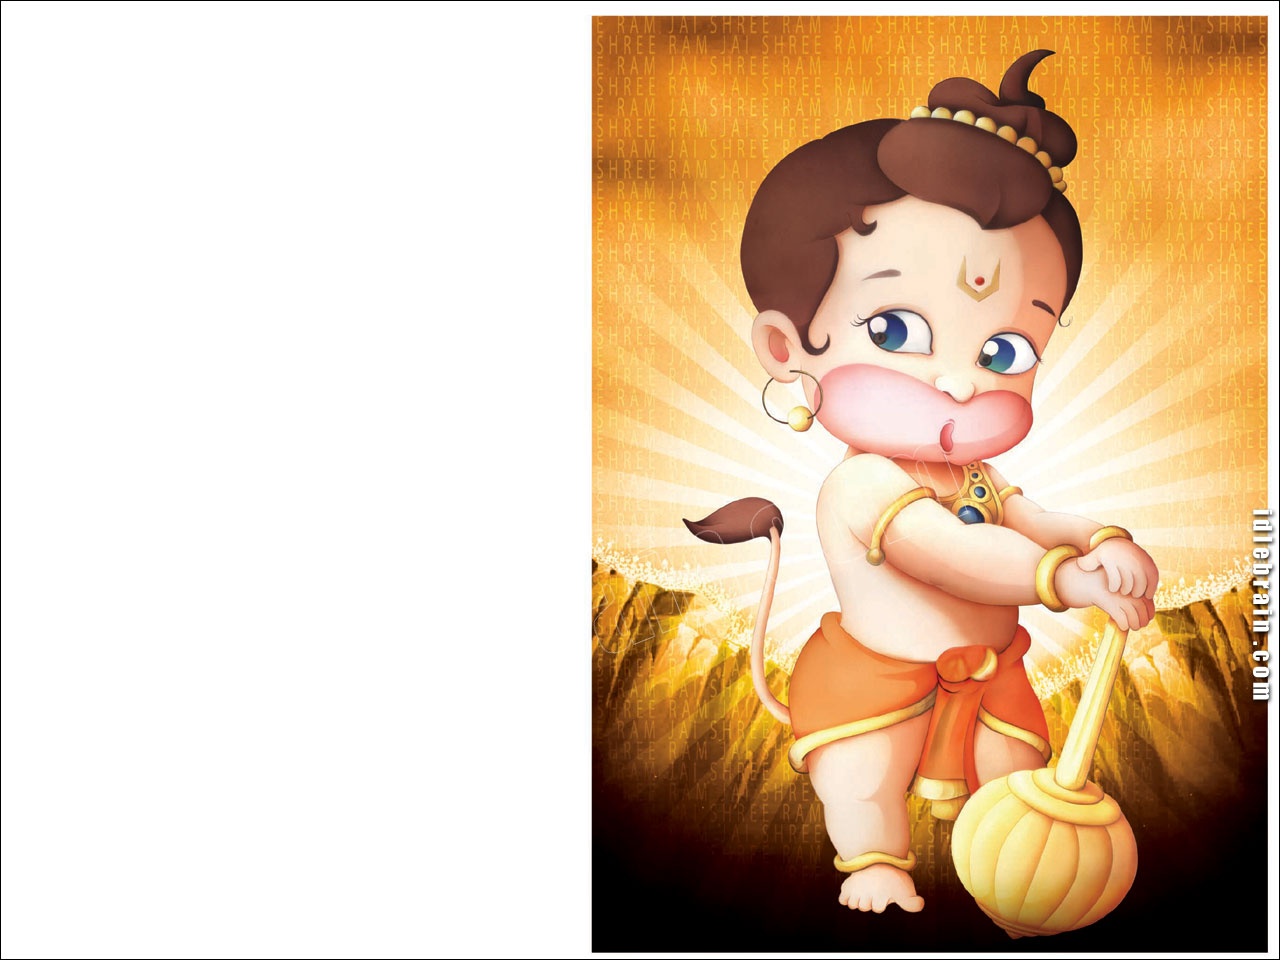 Hanuman - Telugu film wallpapers - animation film